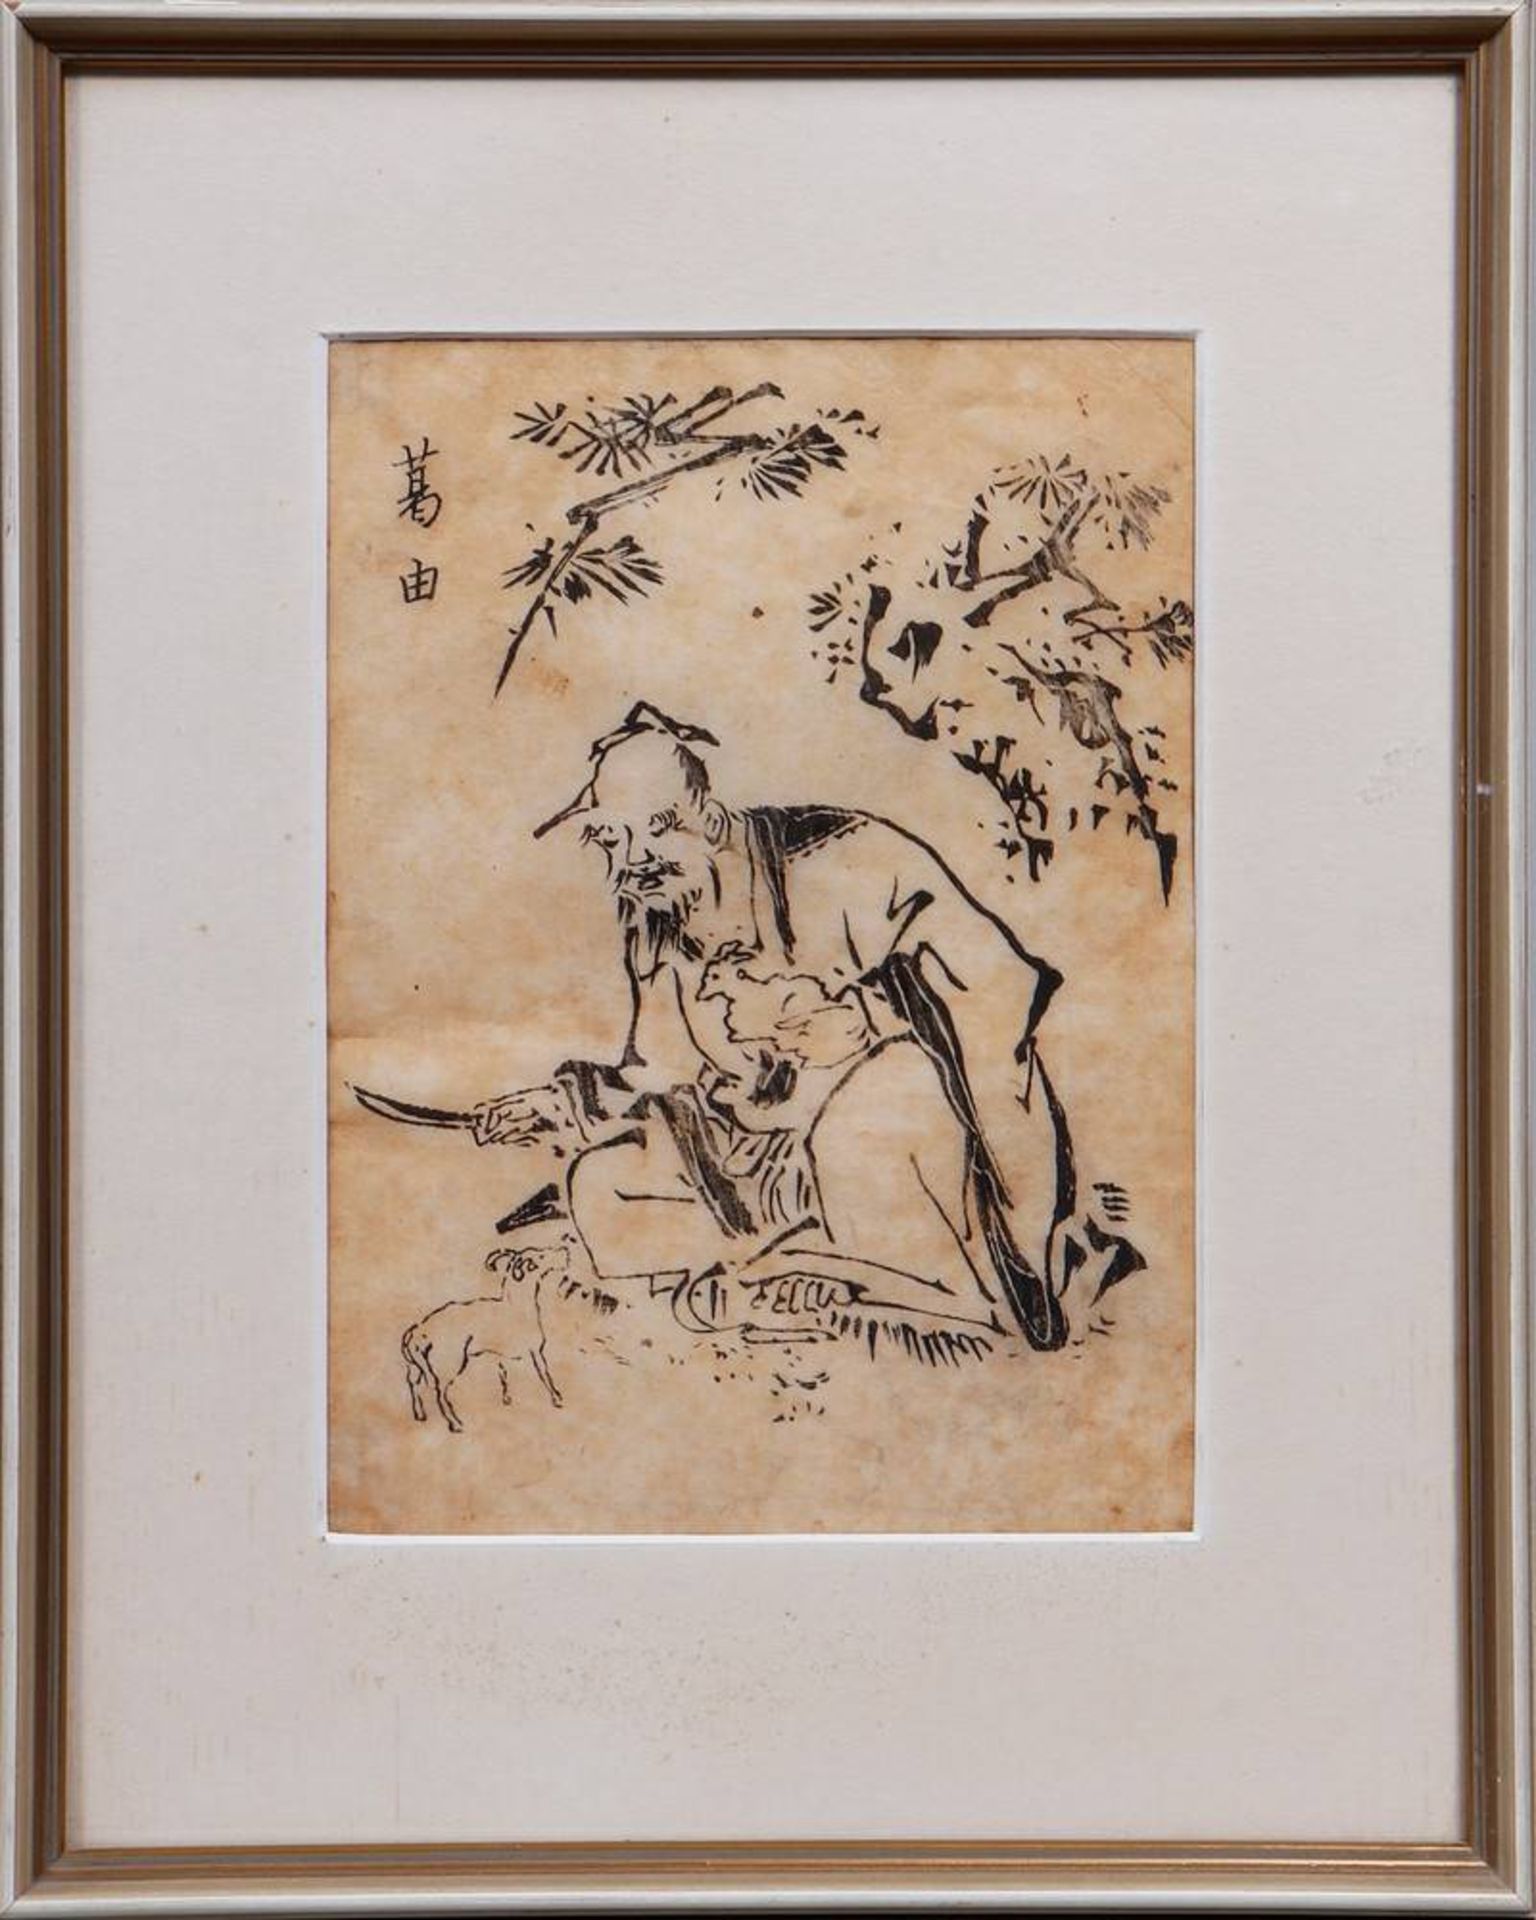 Probably Tachibana Morikuni (1670-1748), Japan, Edo period